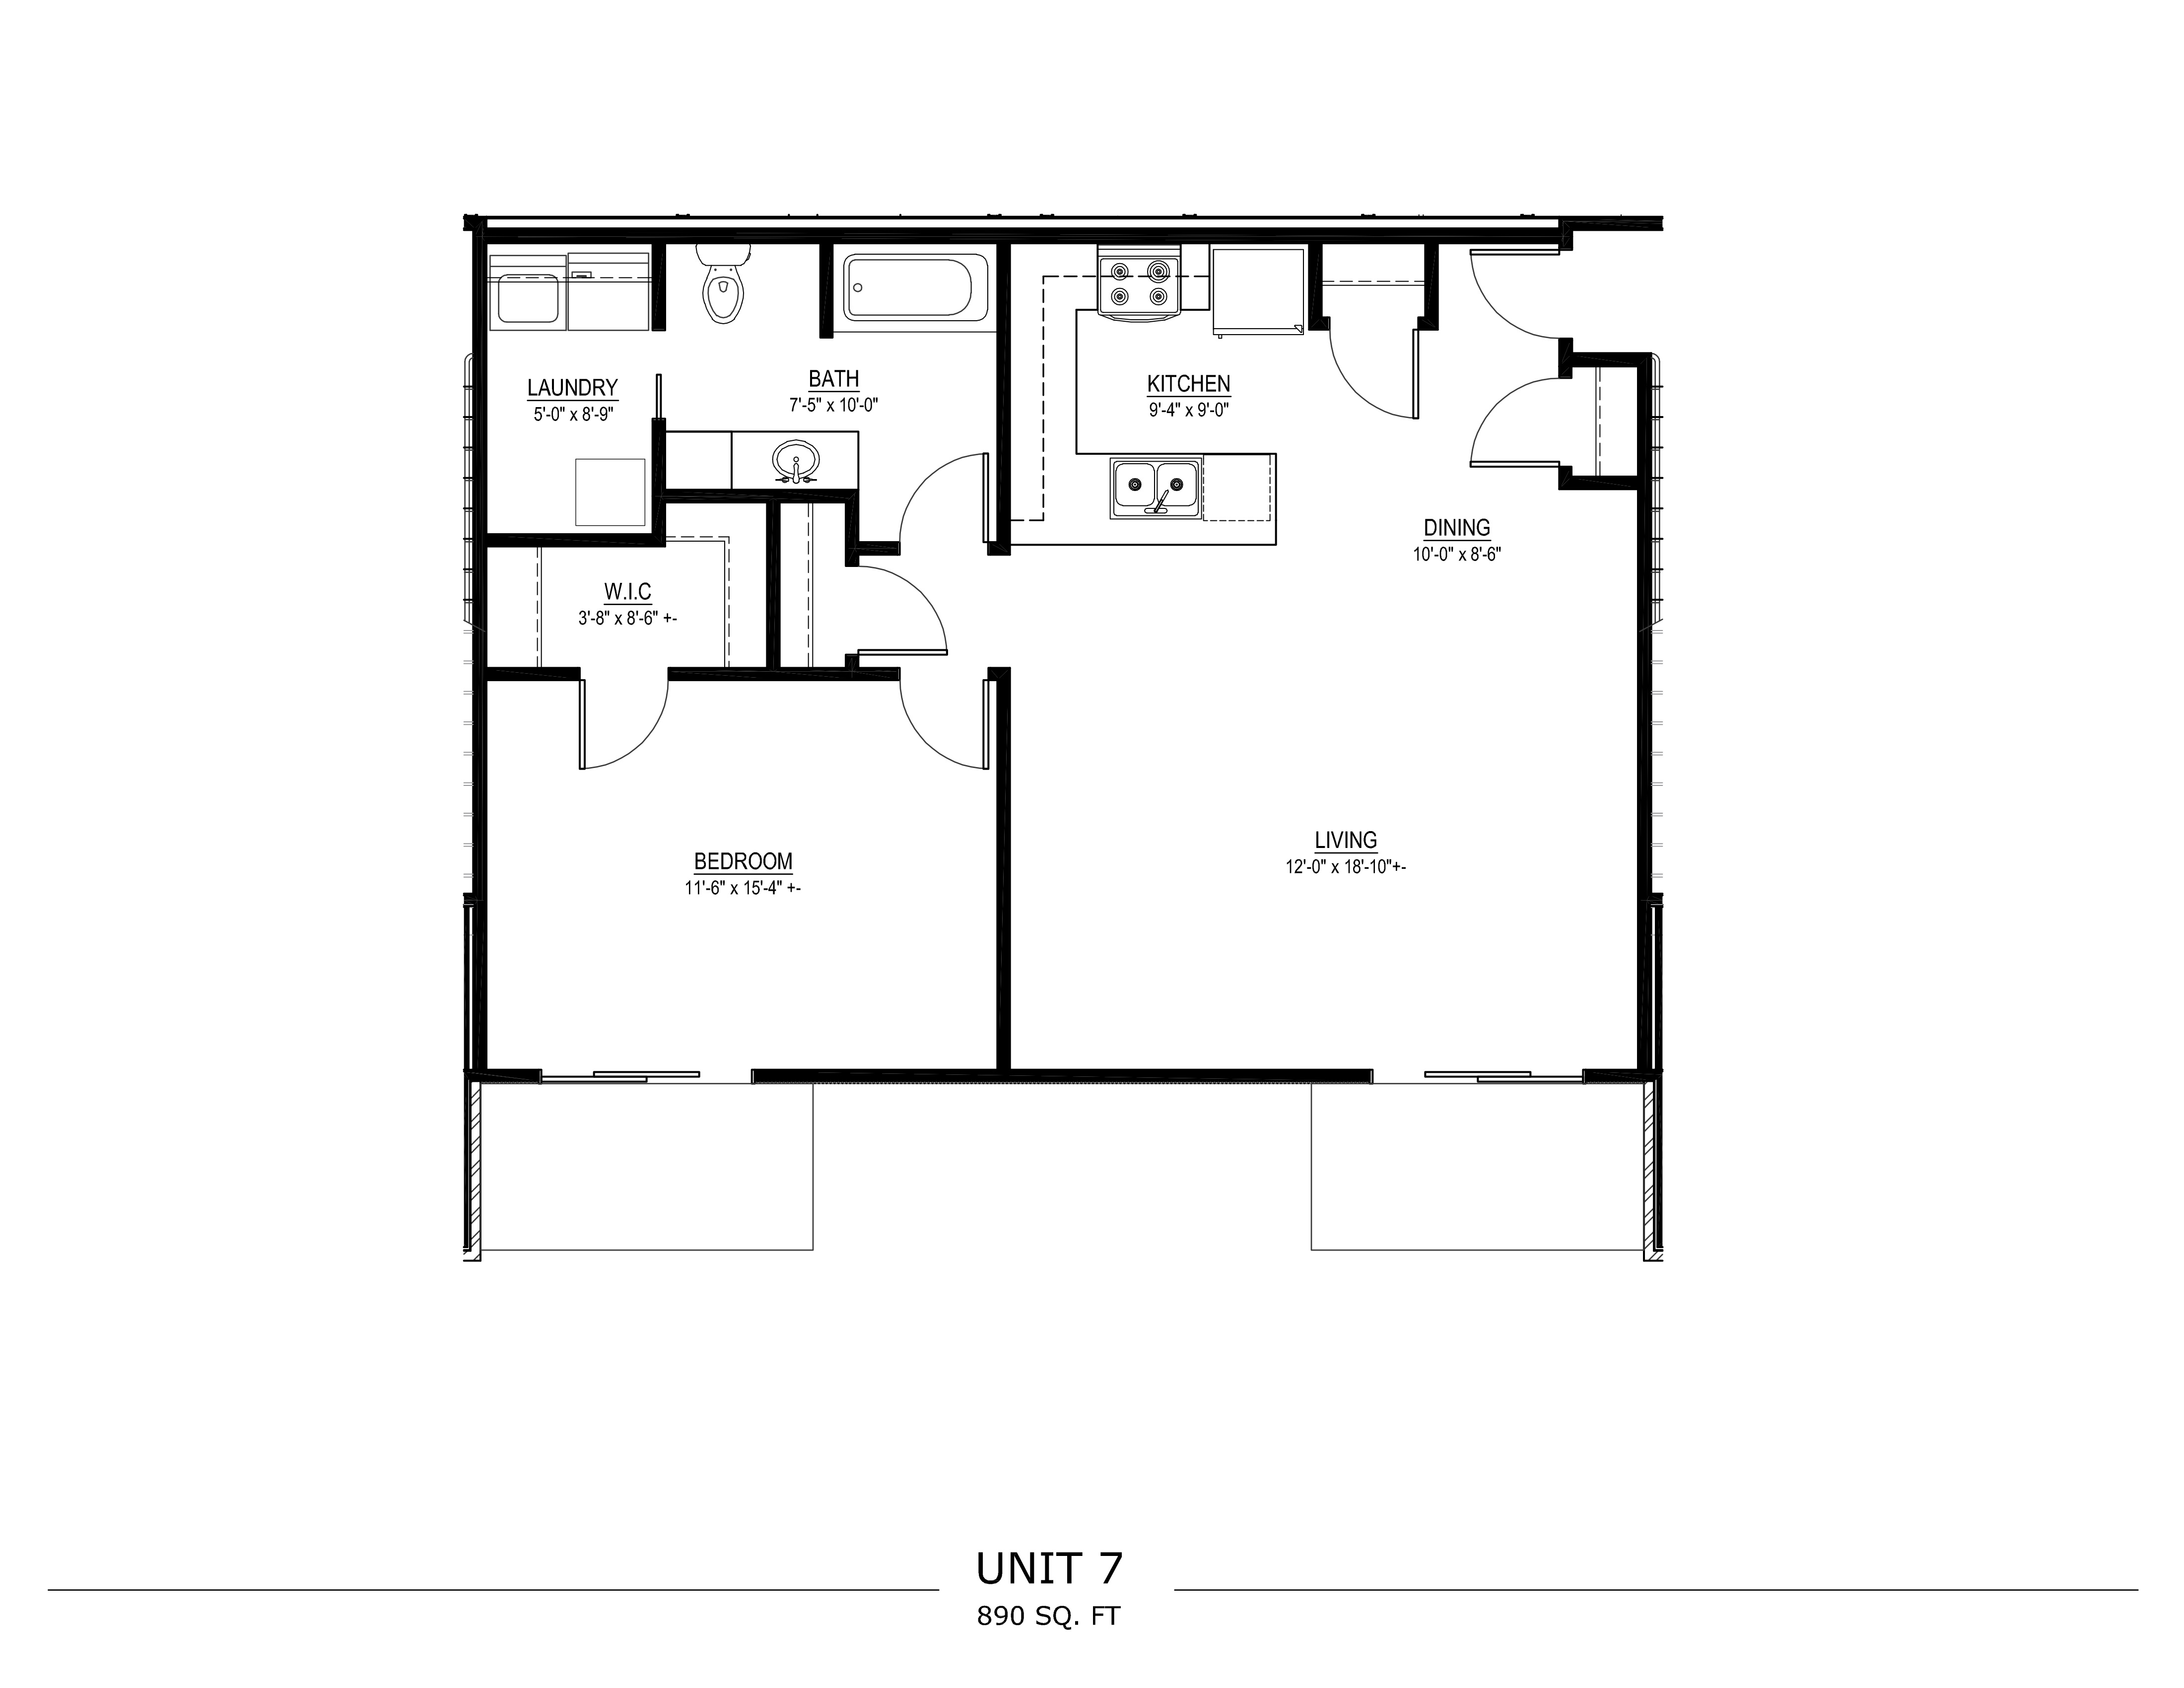 Unit 7 floor plan